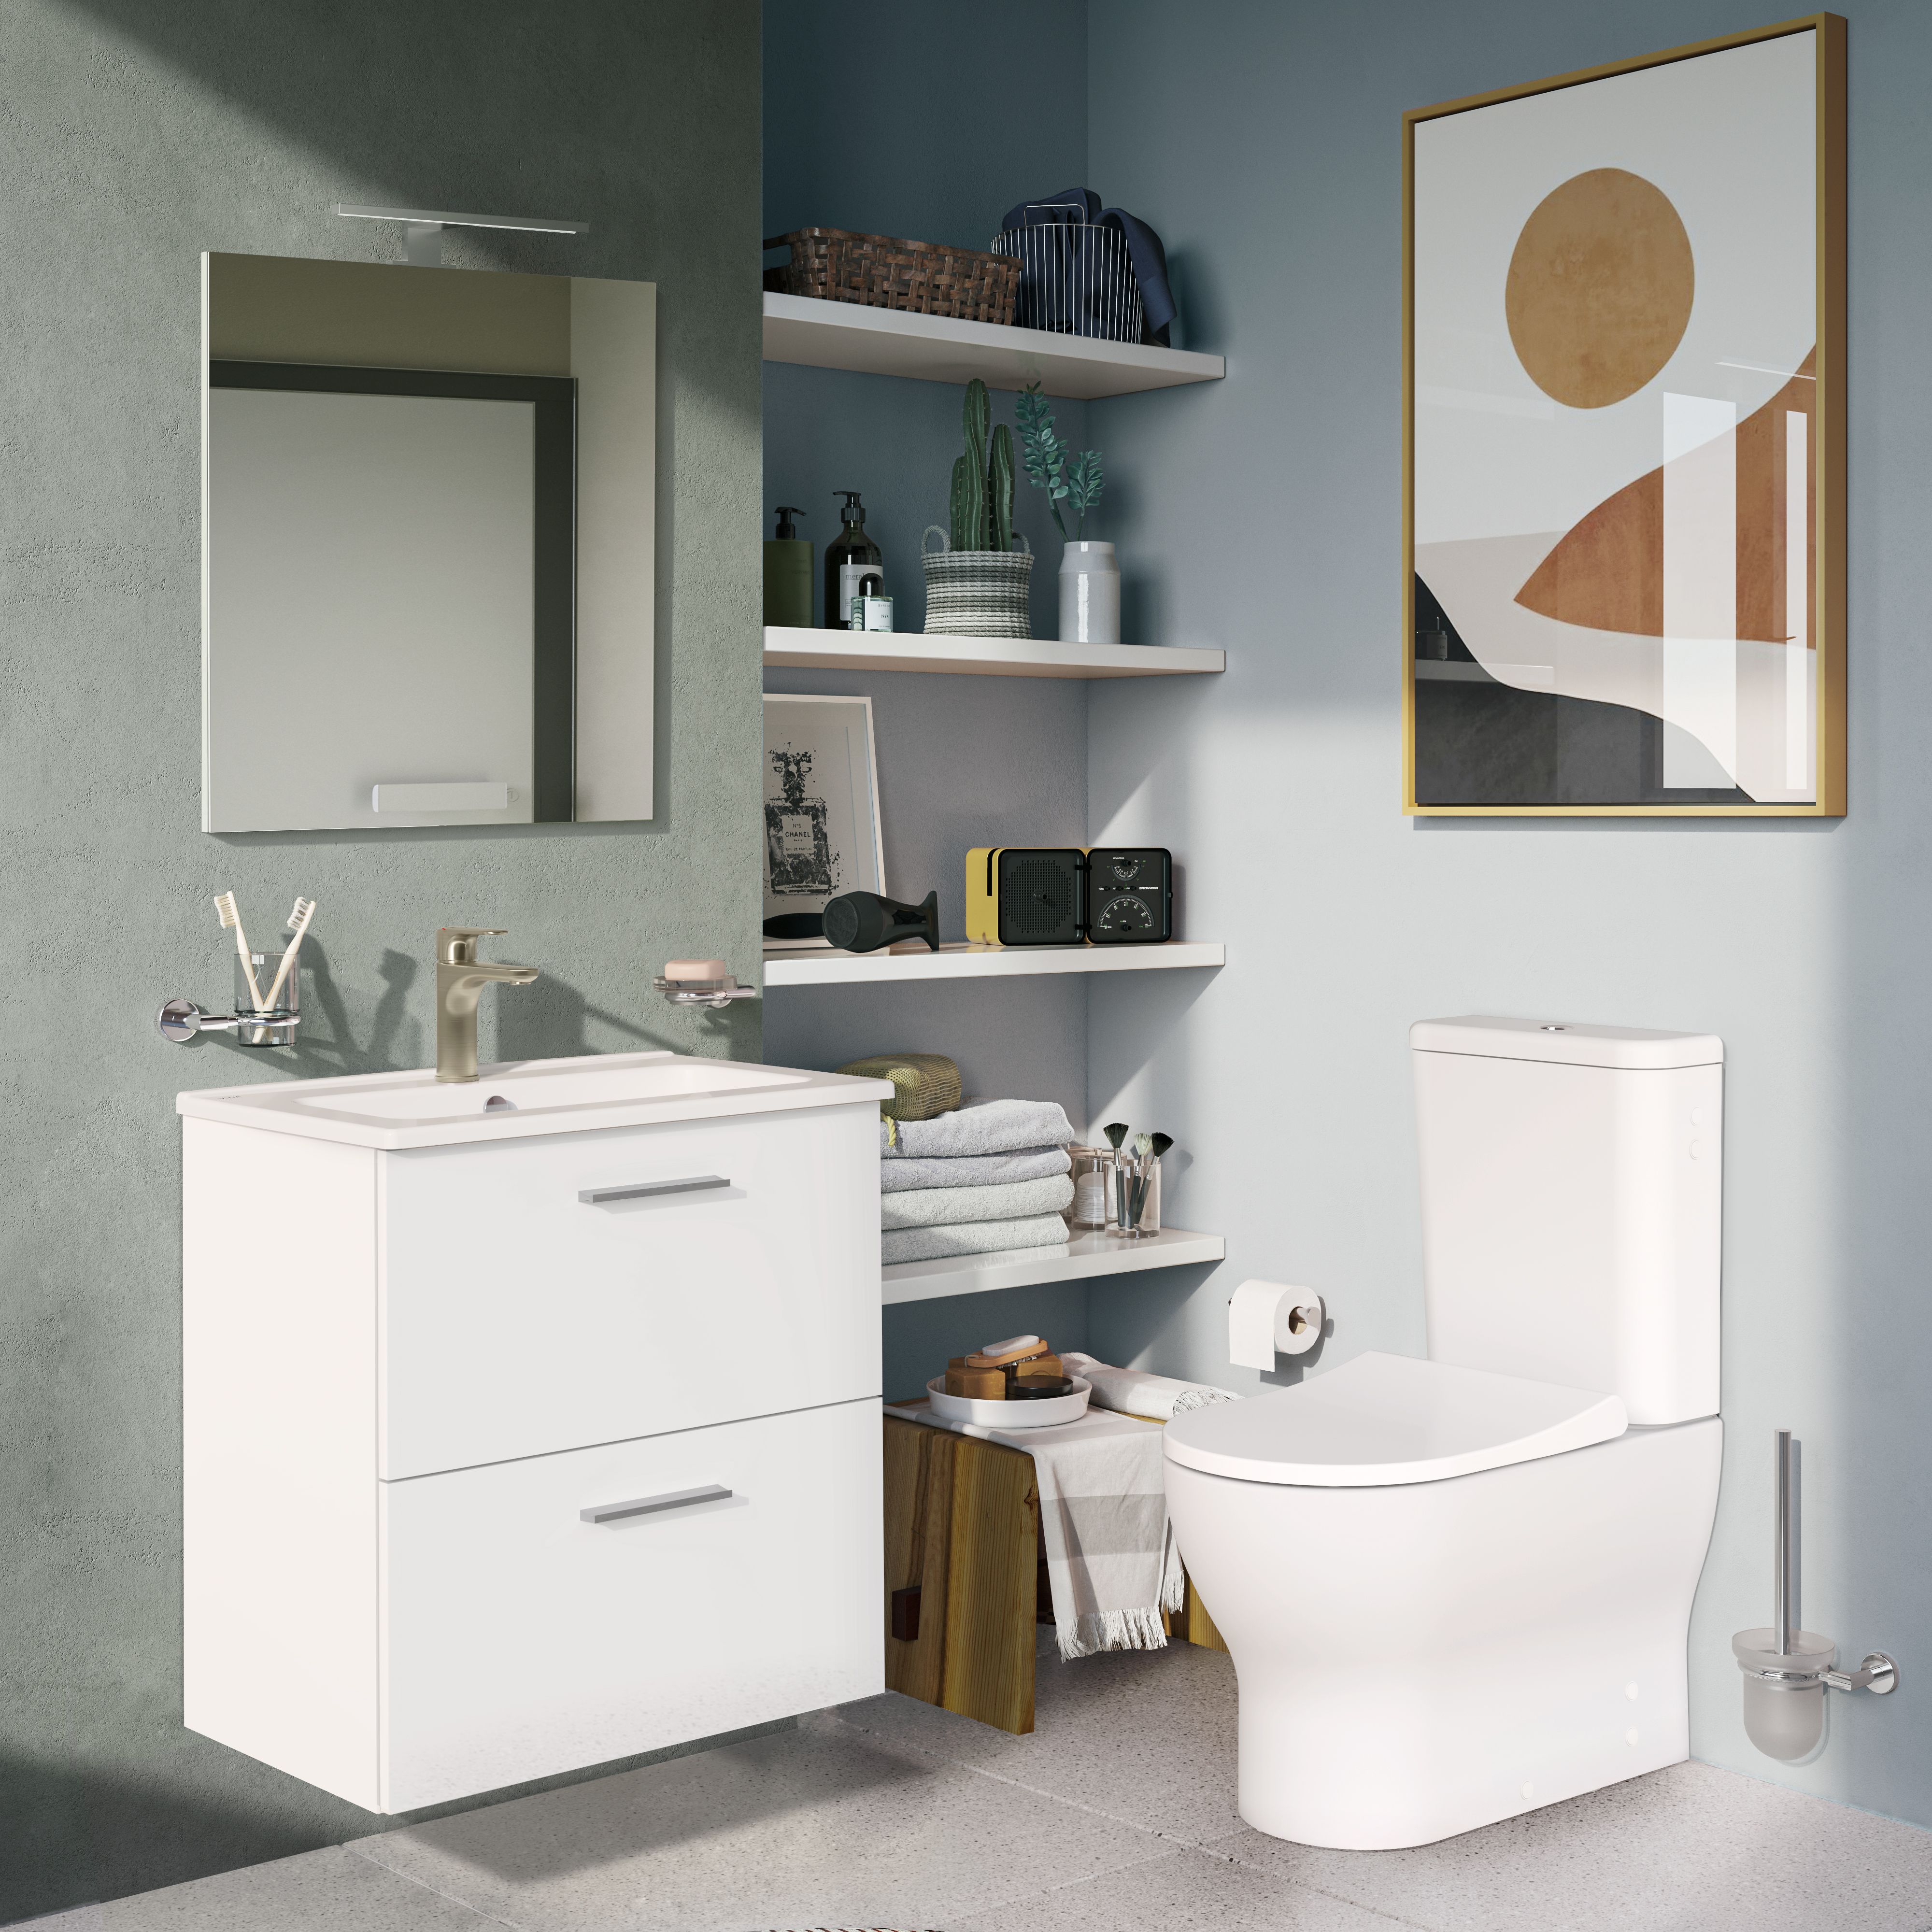 VitrA Koa White Slim Back to wall close-coupled Round Toilet set with Soft close seat